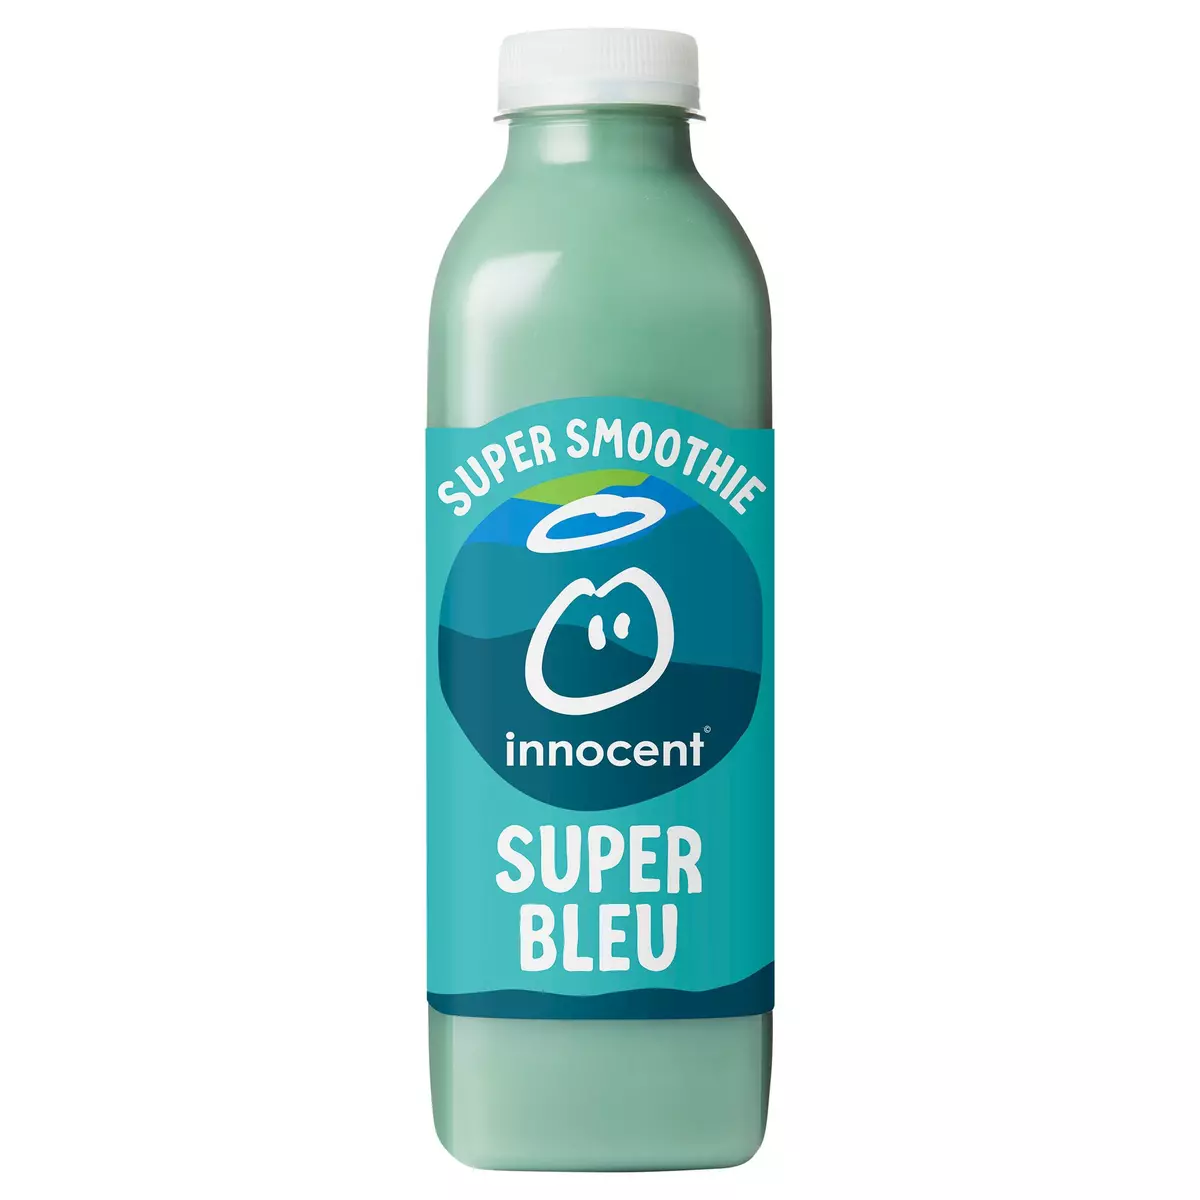 INNOCENT Super smoothie bleu 300ml